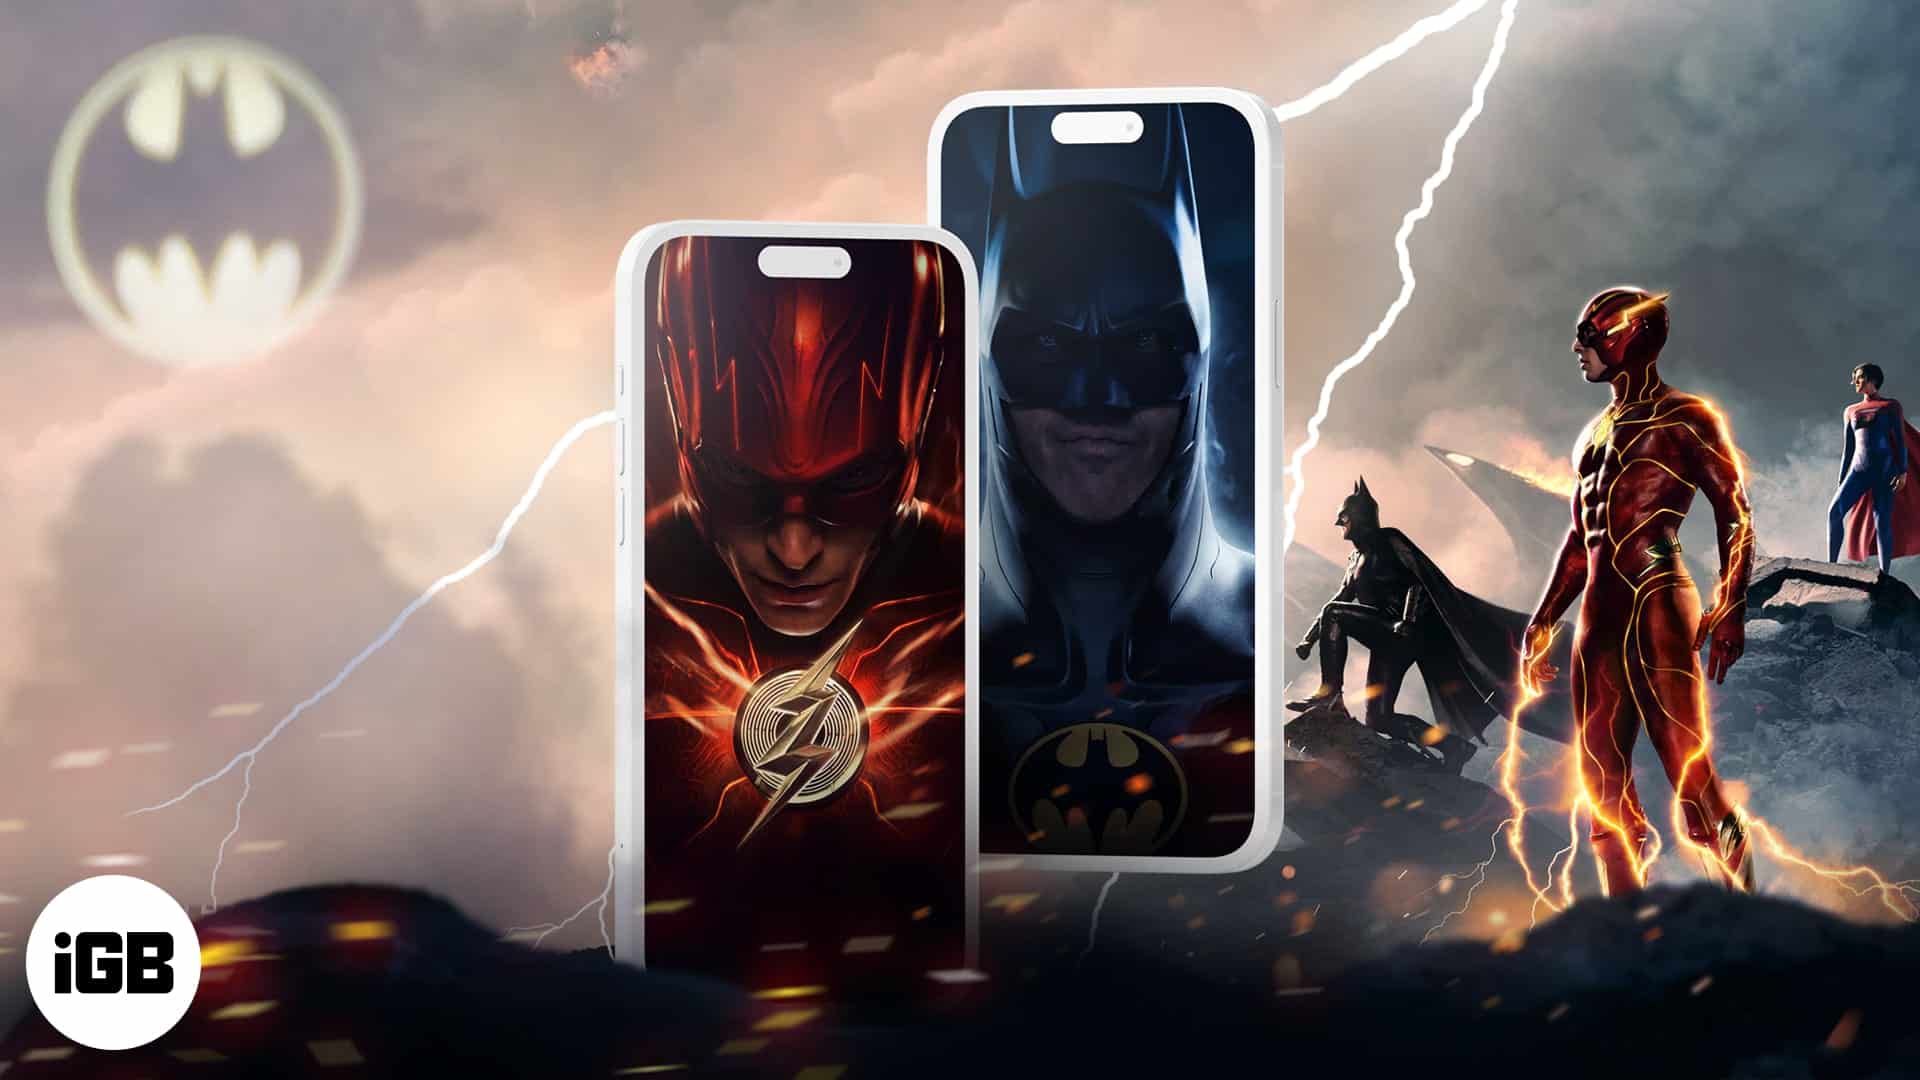 the flash cw iphone wallpaper hd